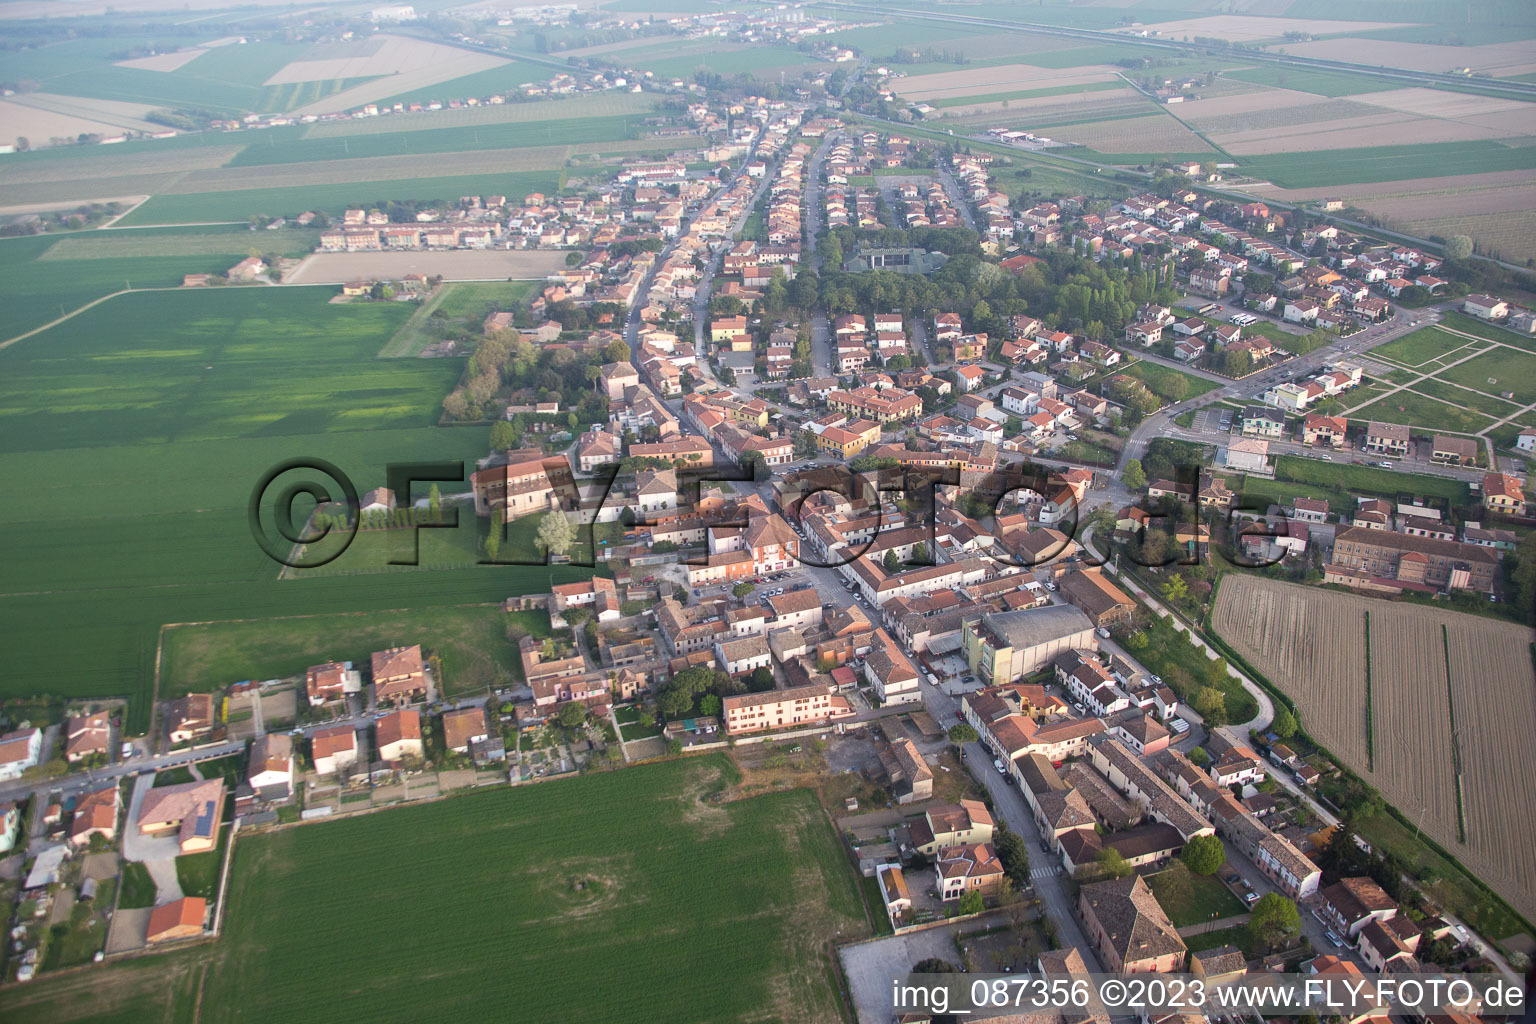 Luftbild von Sant'Alberto im Bundesland Emilia-Romagna, Italien